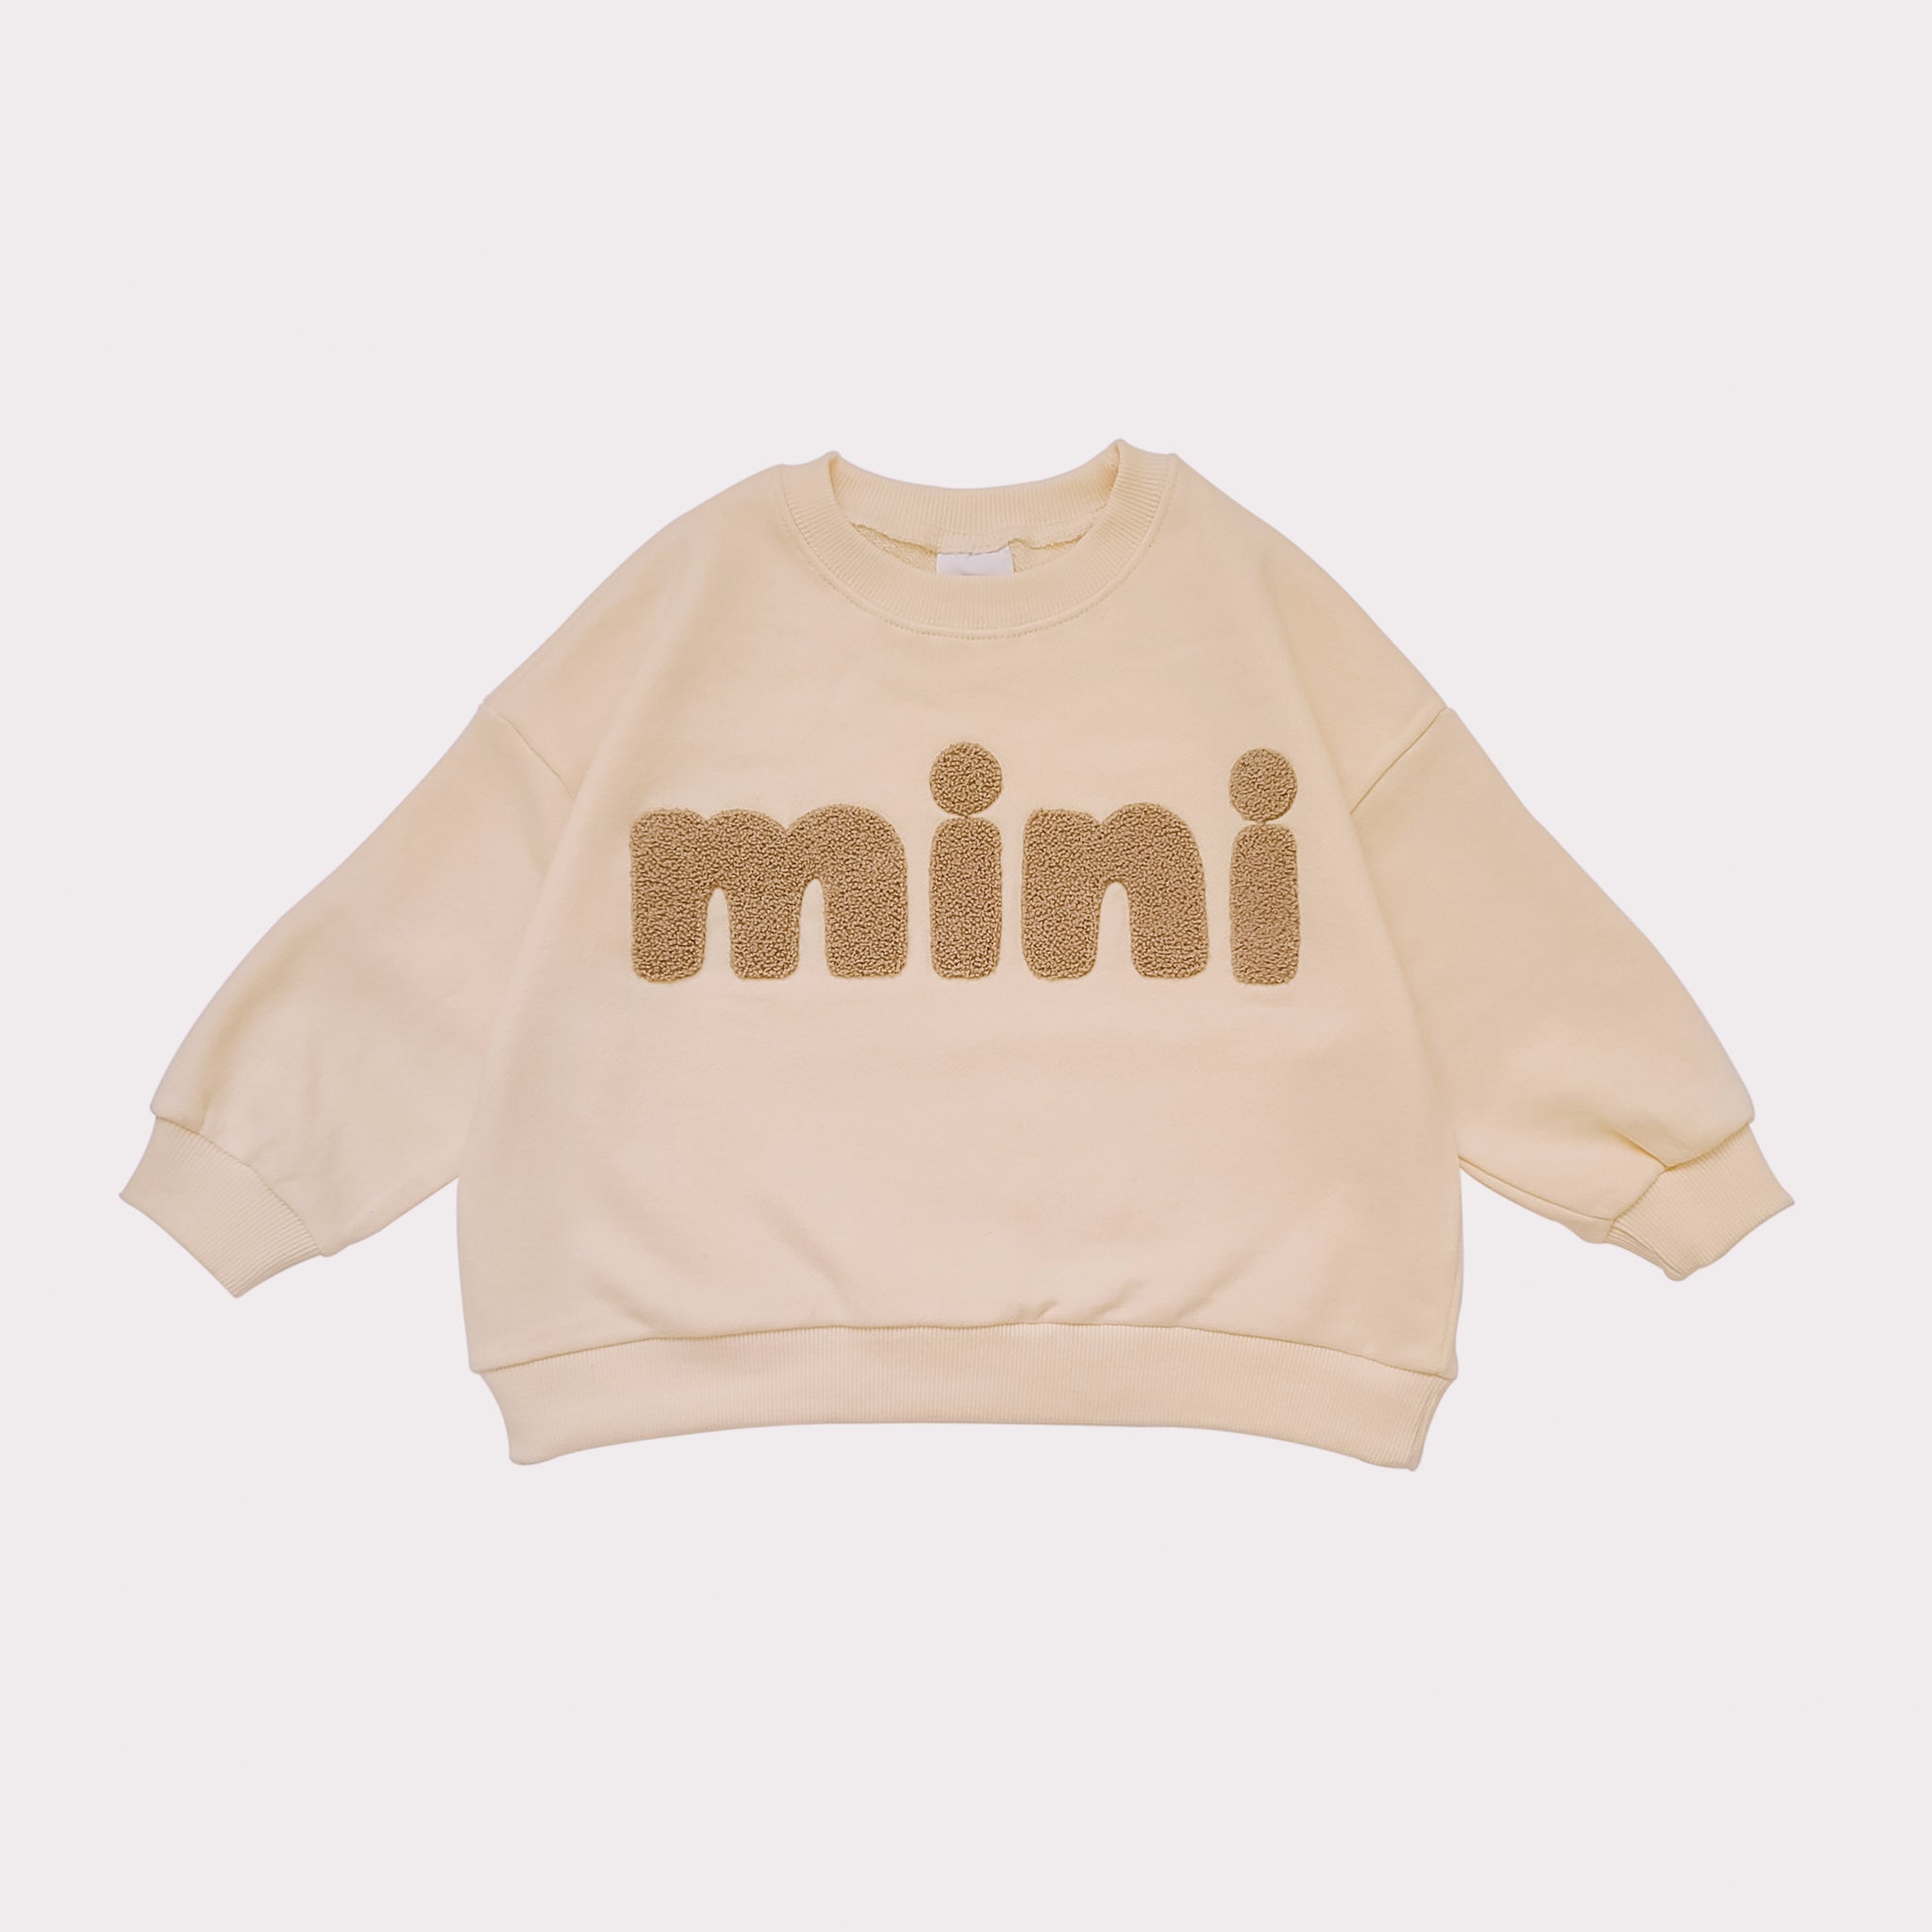 Toddler Mini Sweatshirt  (1-5y) - Cream - AT NOON STORE